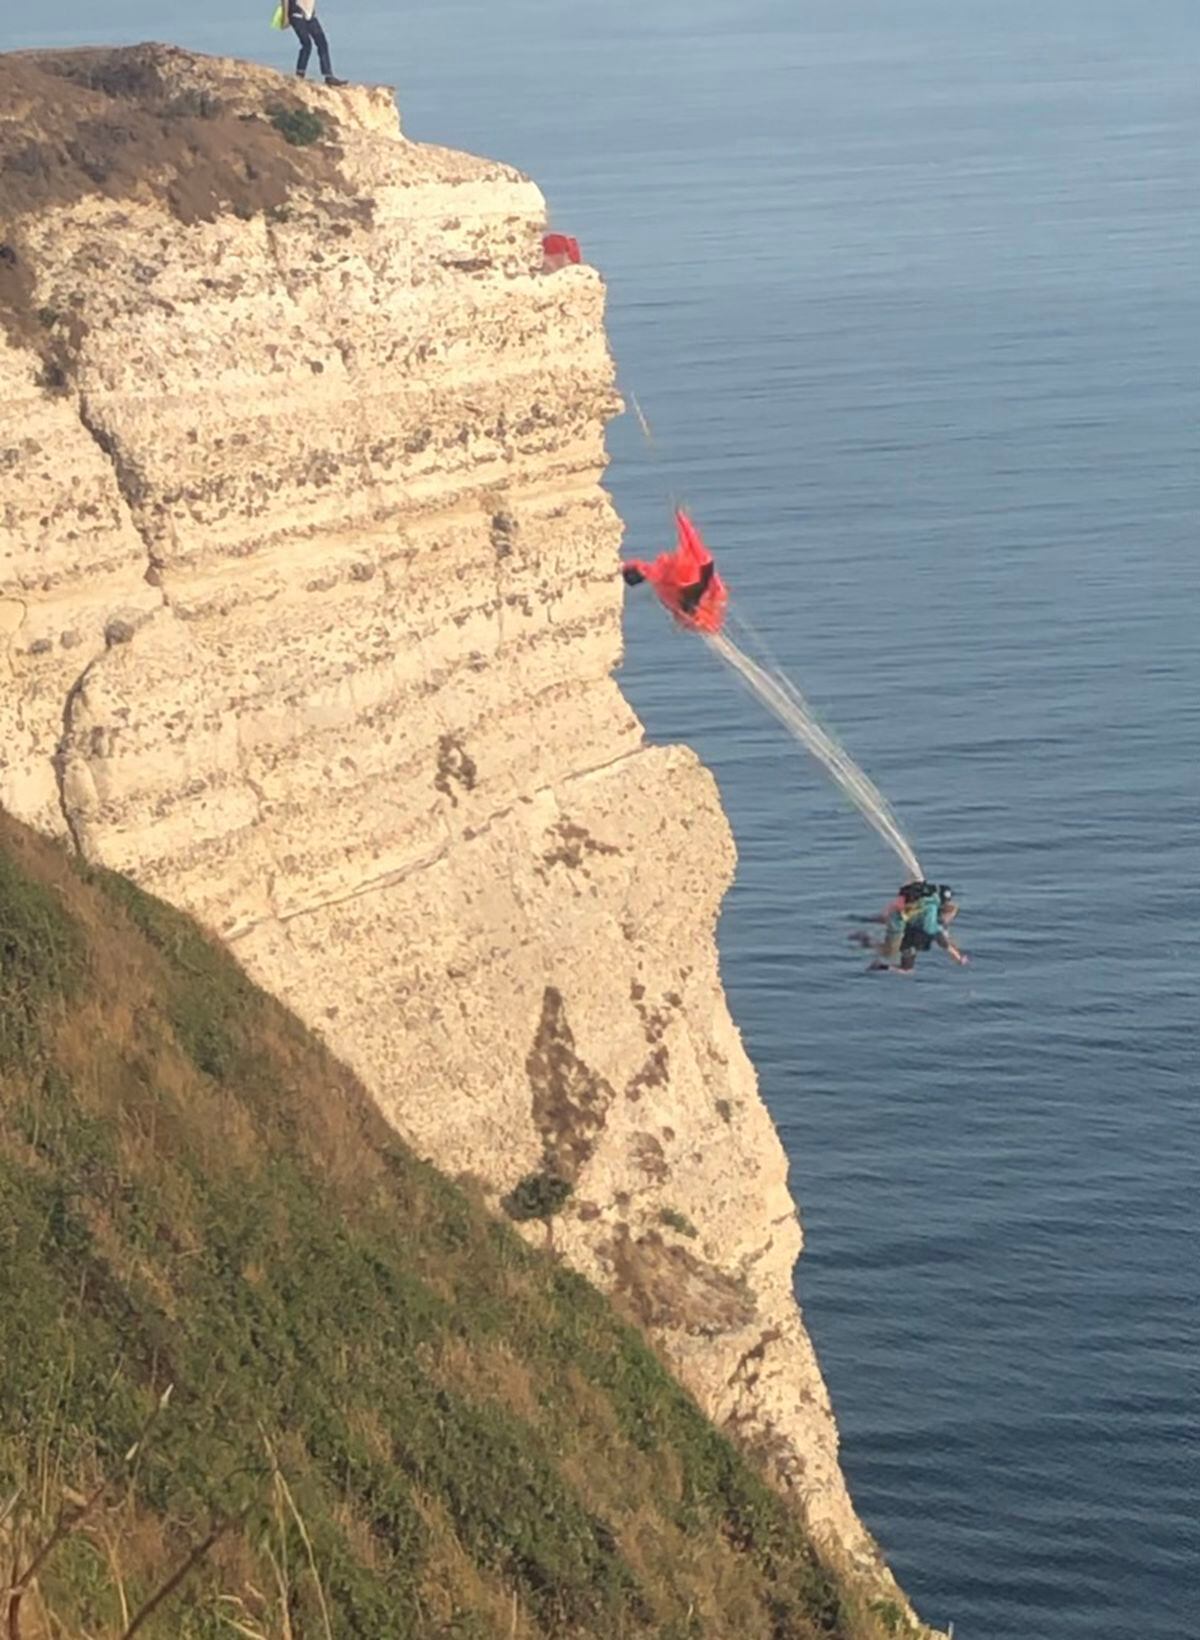 Jumping from Beer Head cliffs